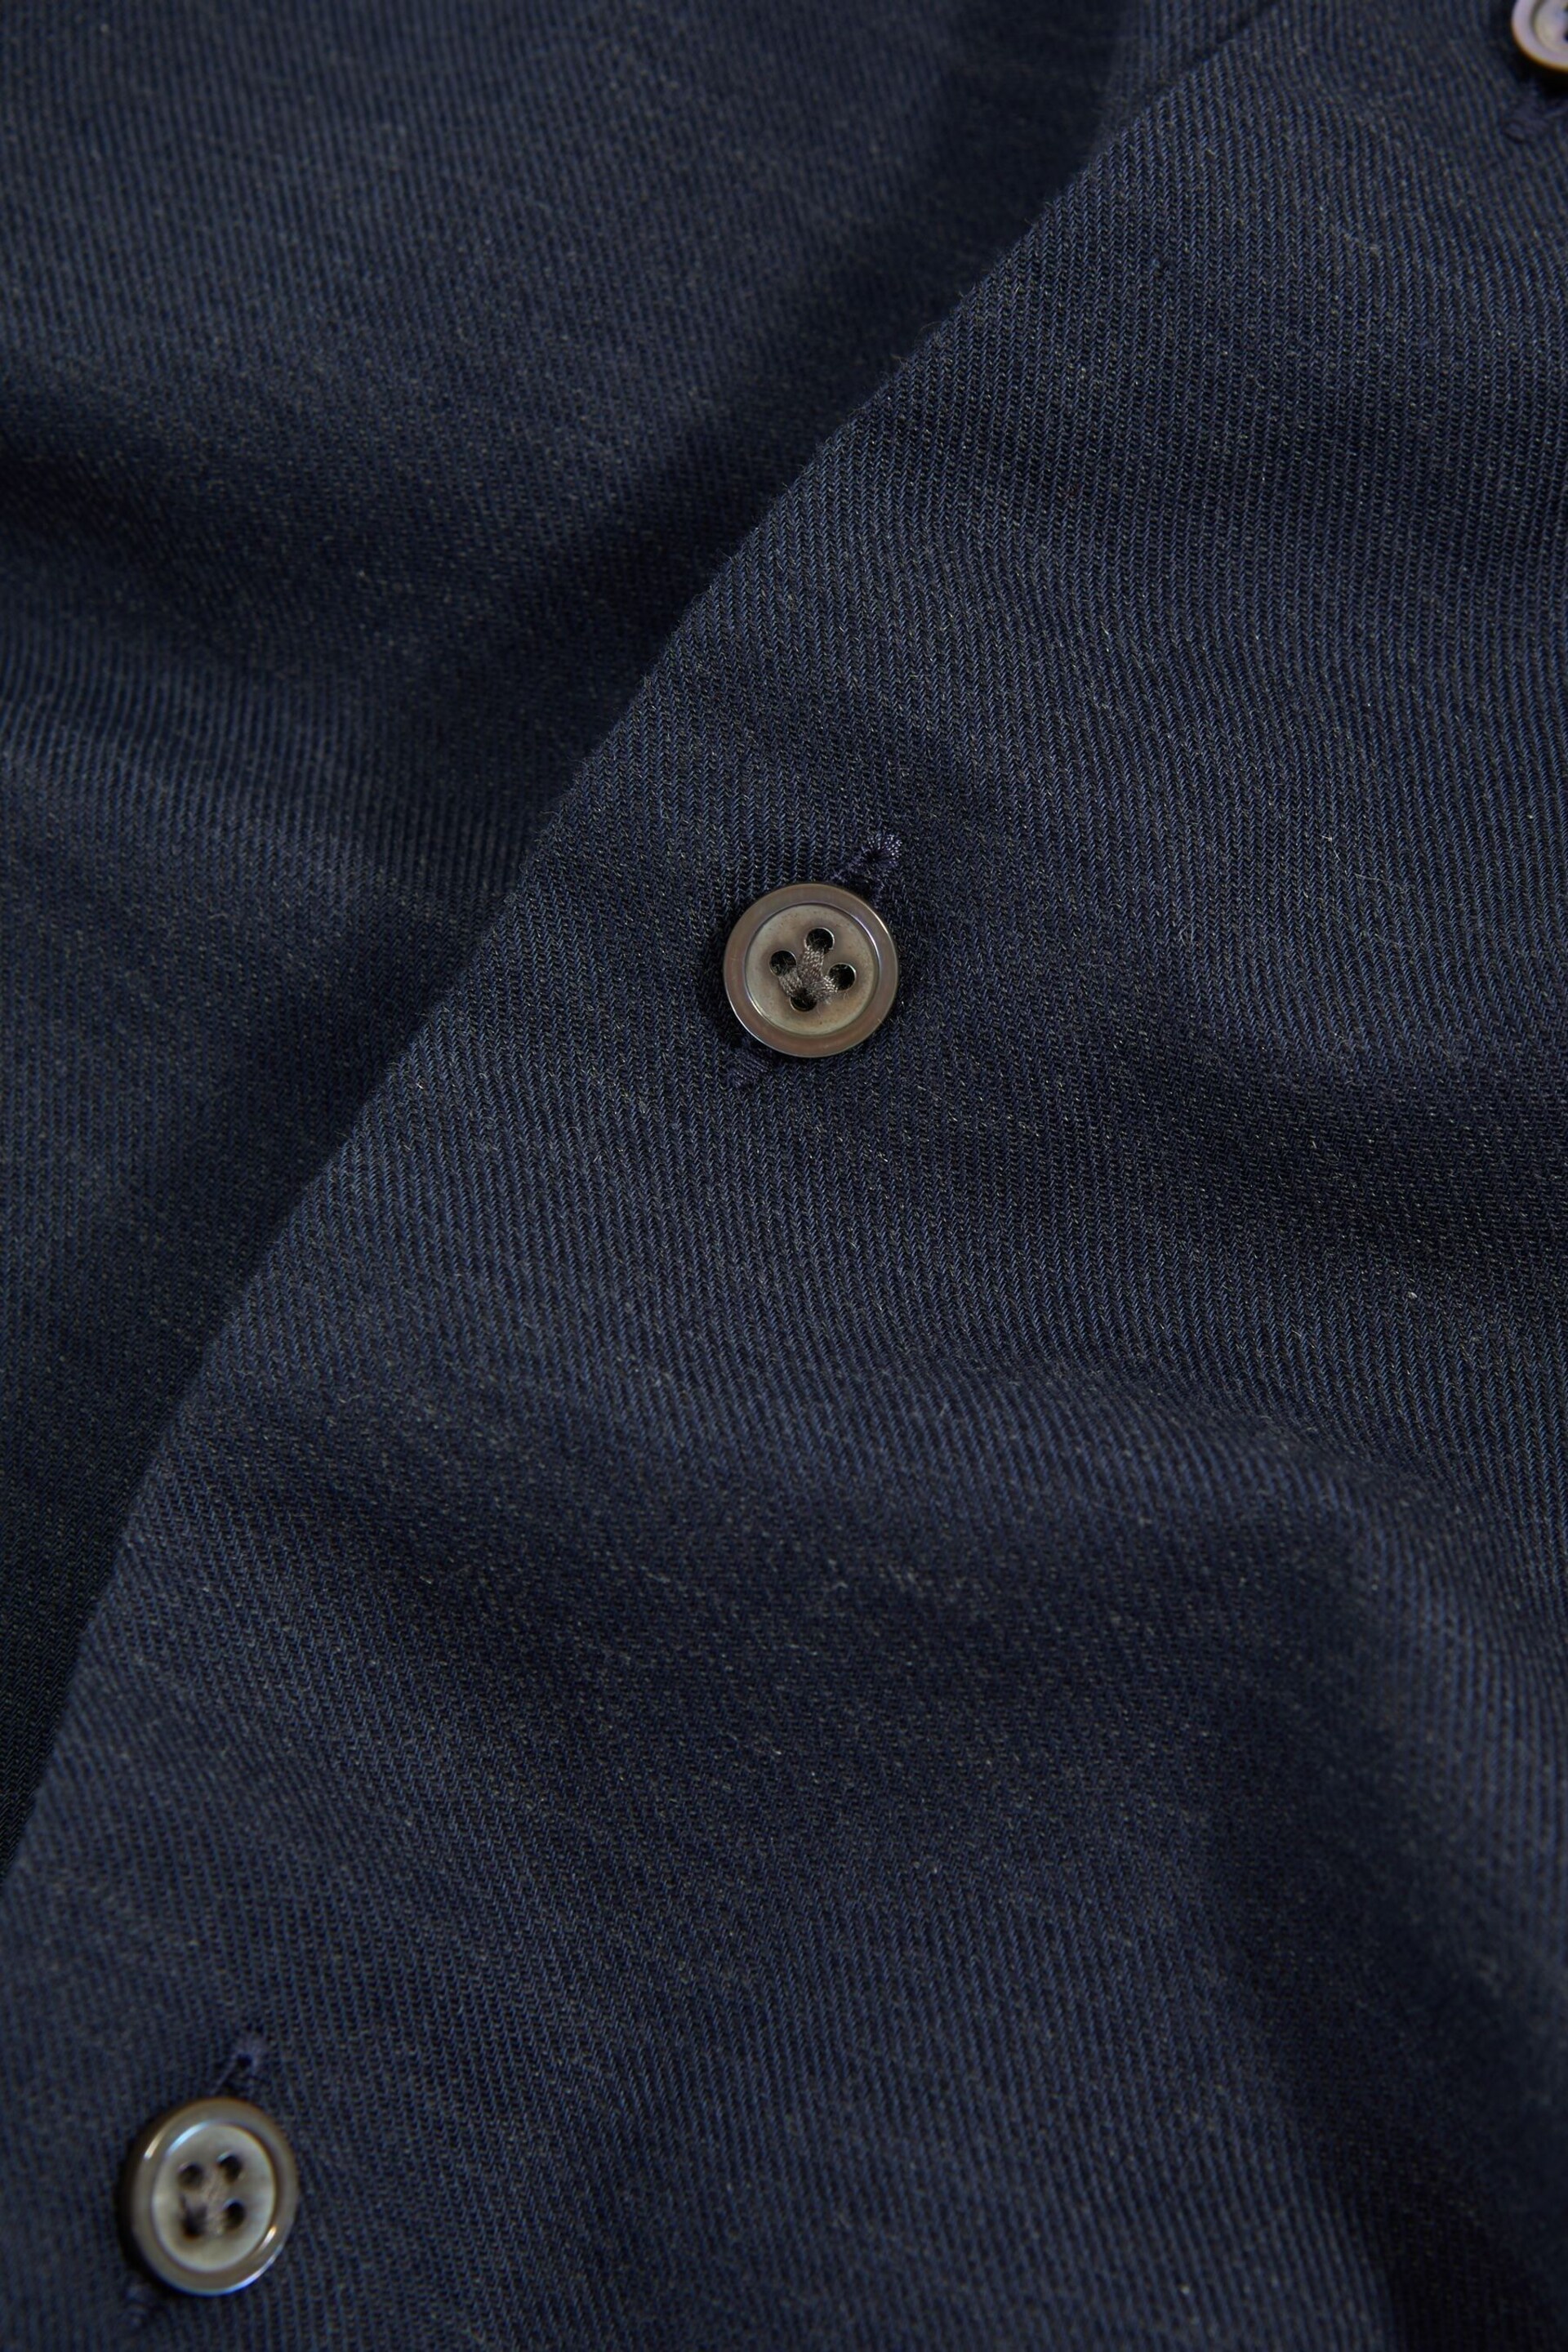 Reiss Navy Croydon Italian Cotton Cashmere Shirt - Image 6 of 6